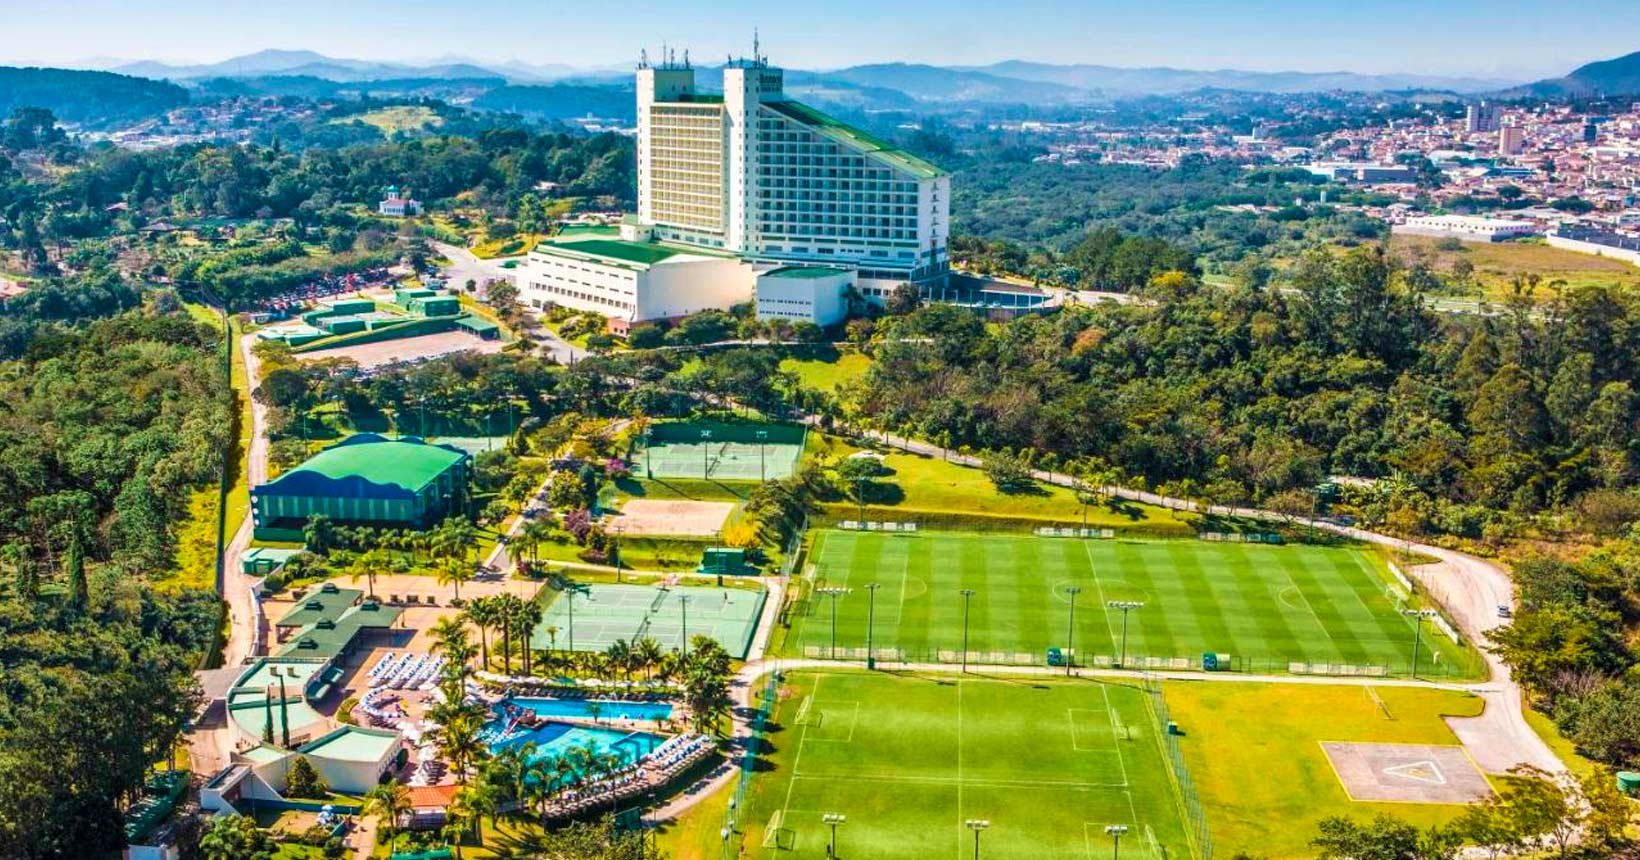 16 resorts near São Paulo to enjoy the July 9th holiday